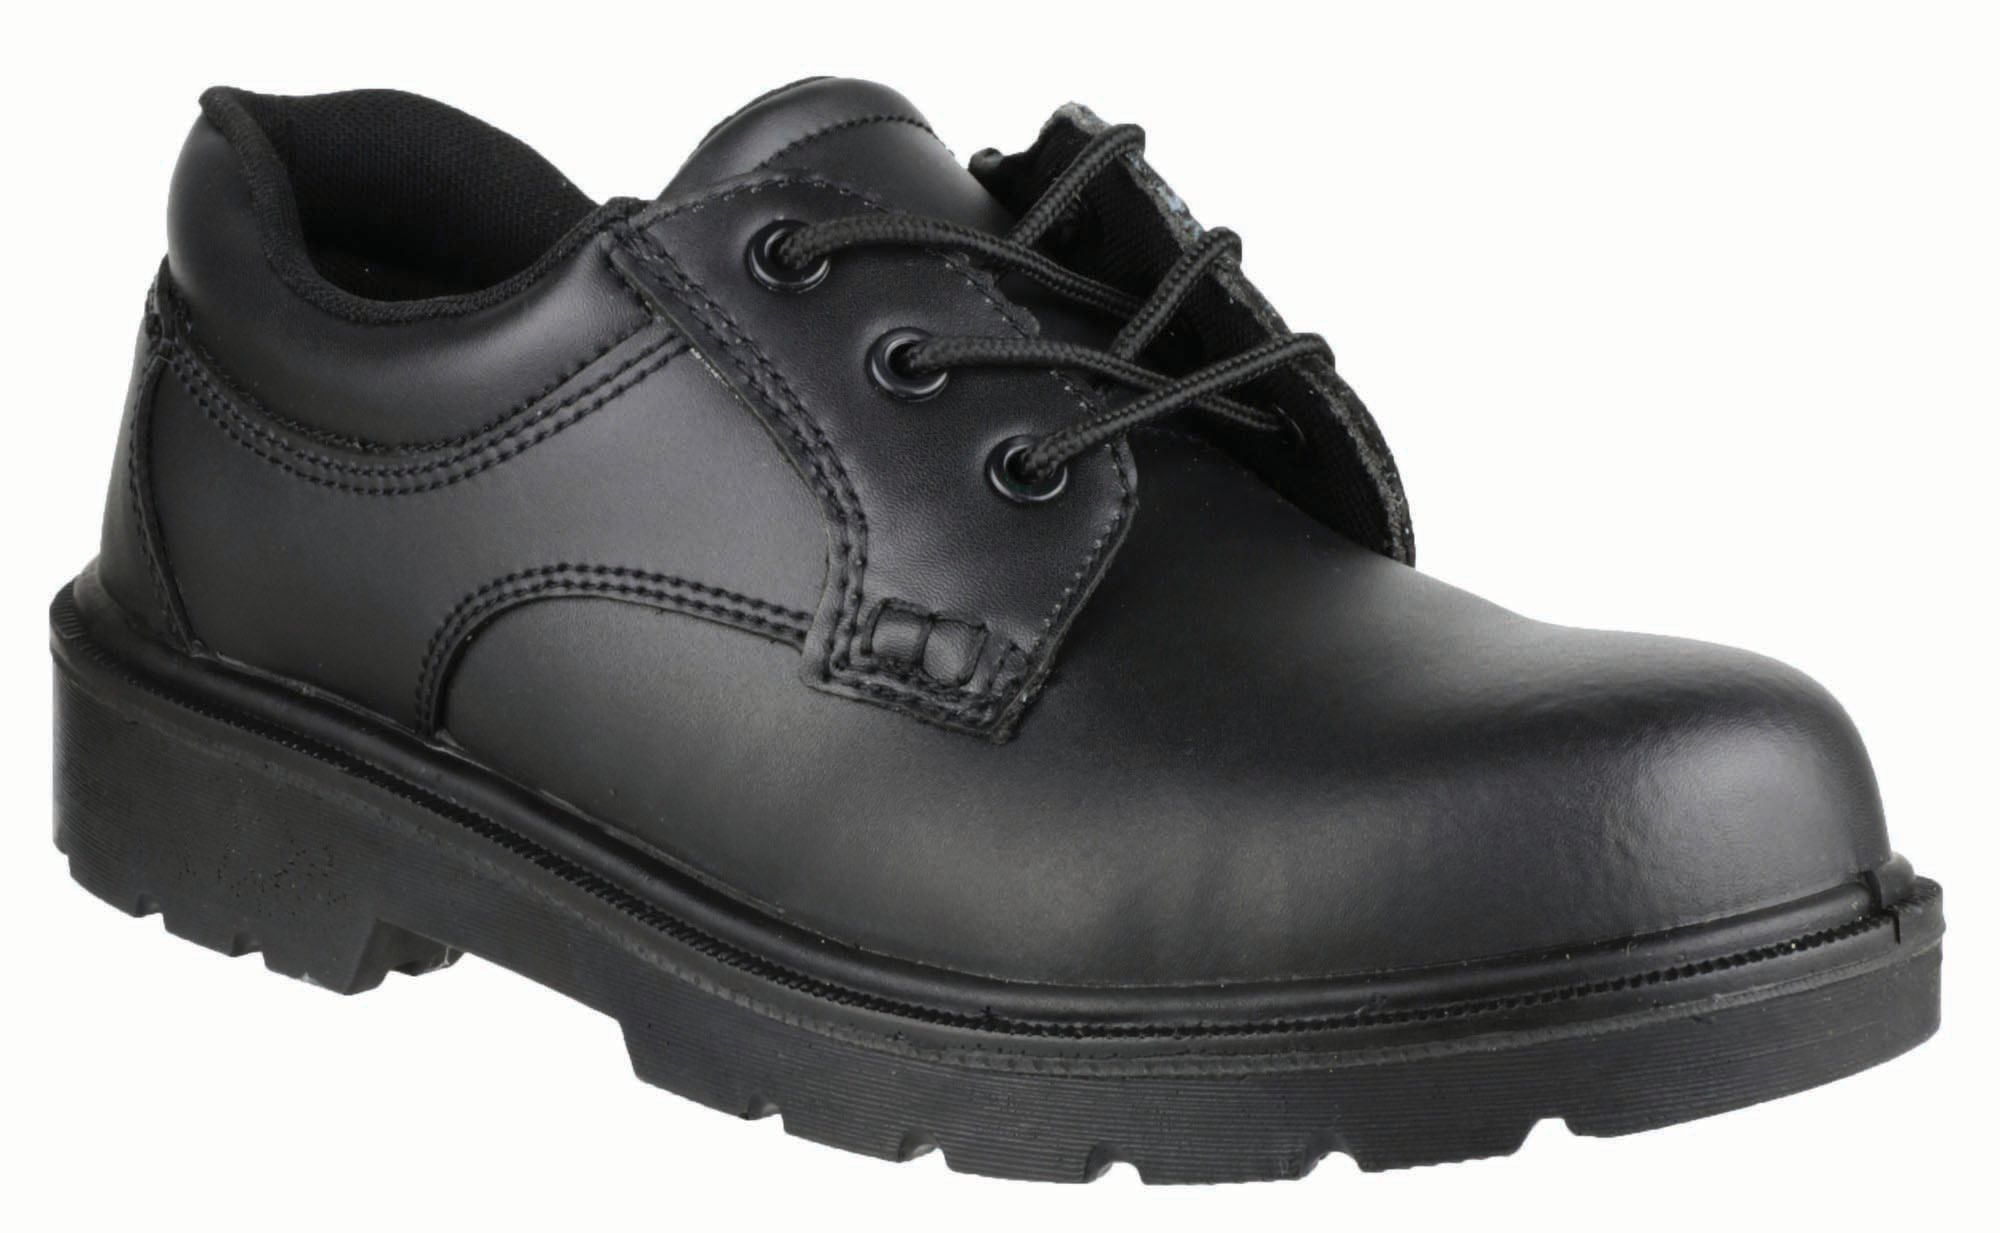 Image of Amblers Safety FS38C Safety Shoe - Black Size 11